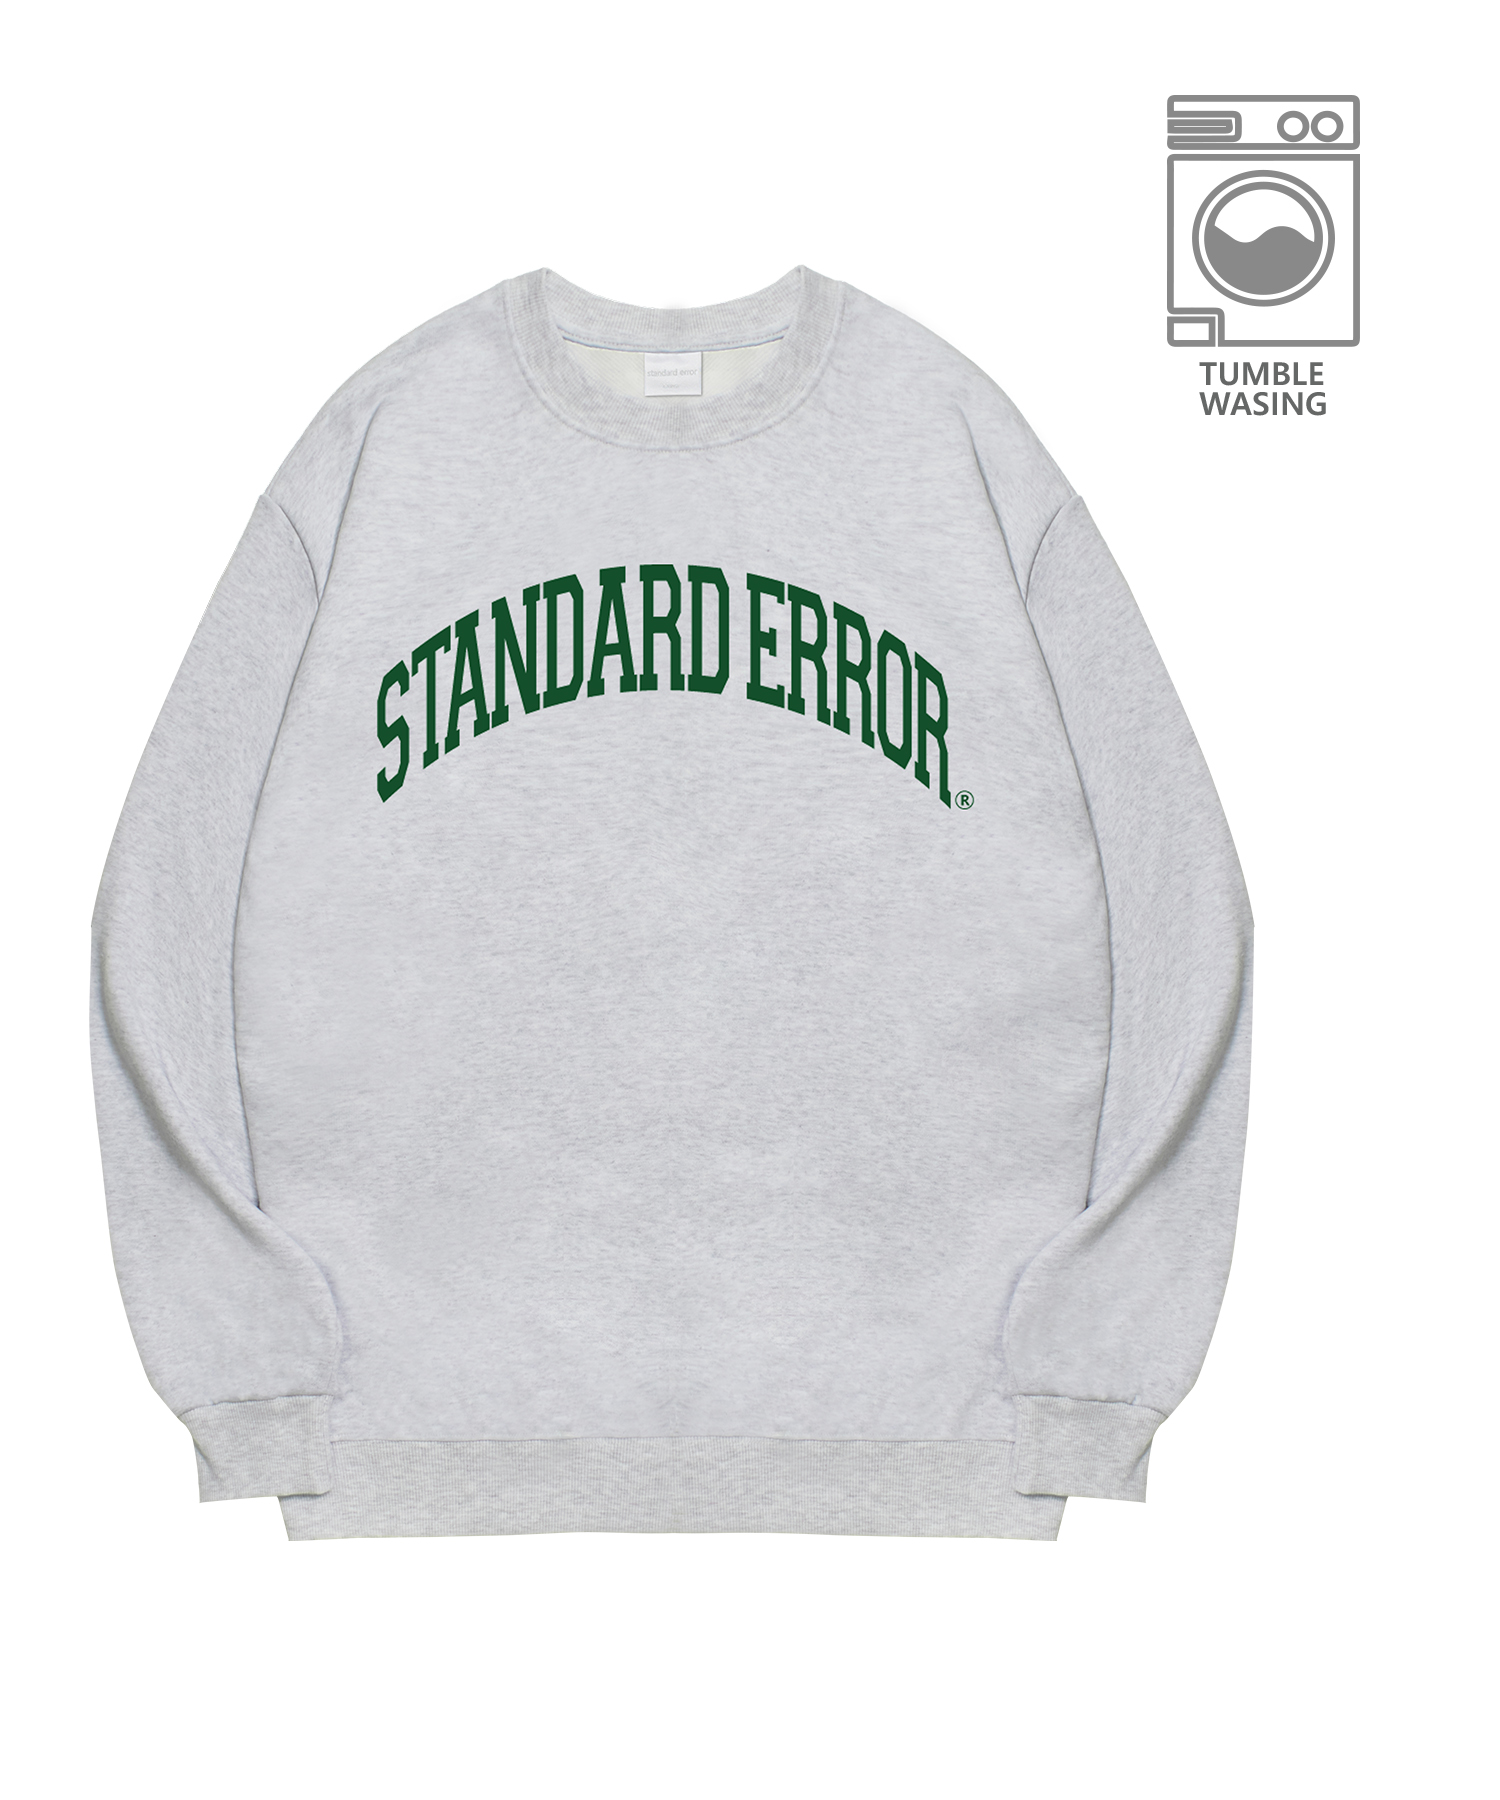 IRT127 Old School Standard Error Logo Arch Lettering Semi-Oversized Fit Sweatshirt Medium Gray